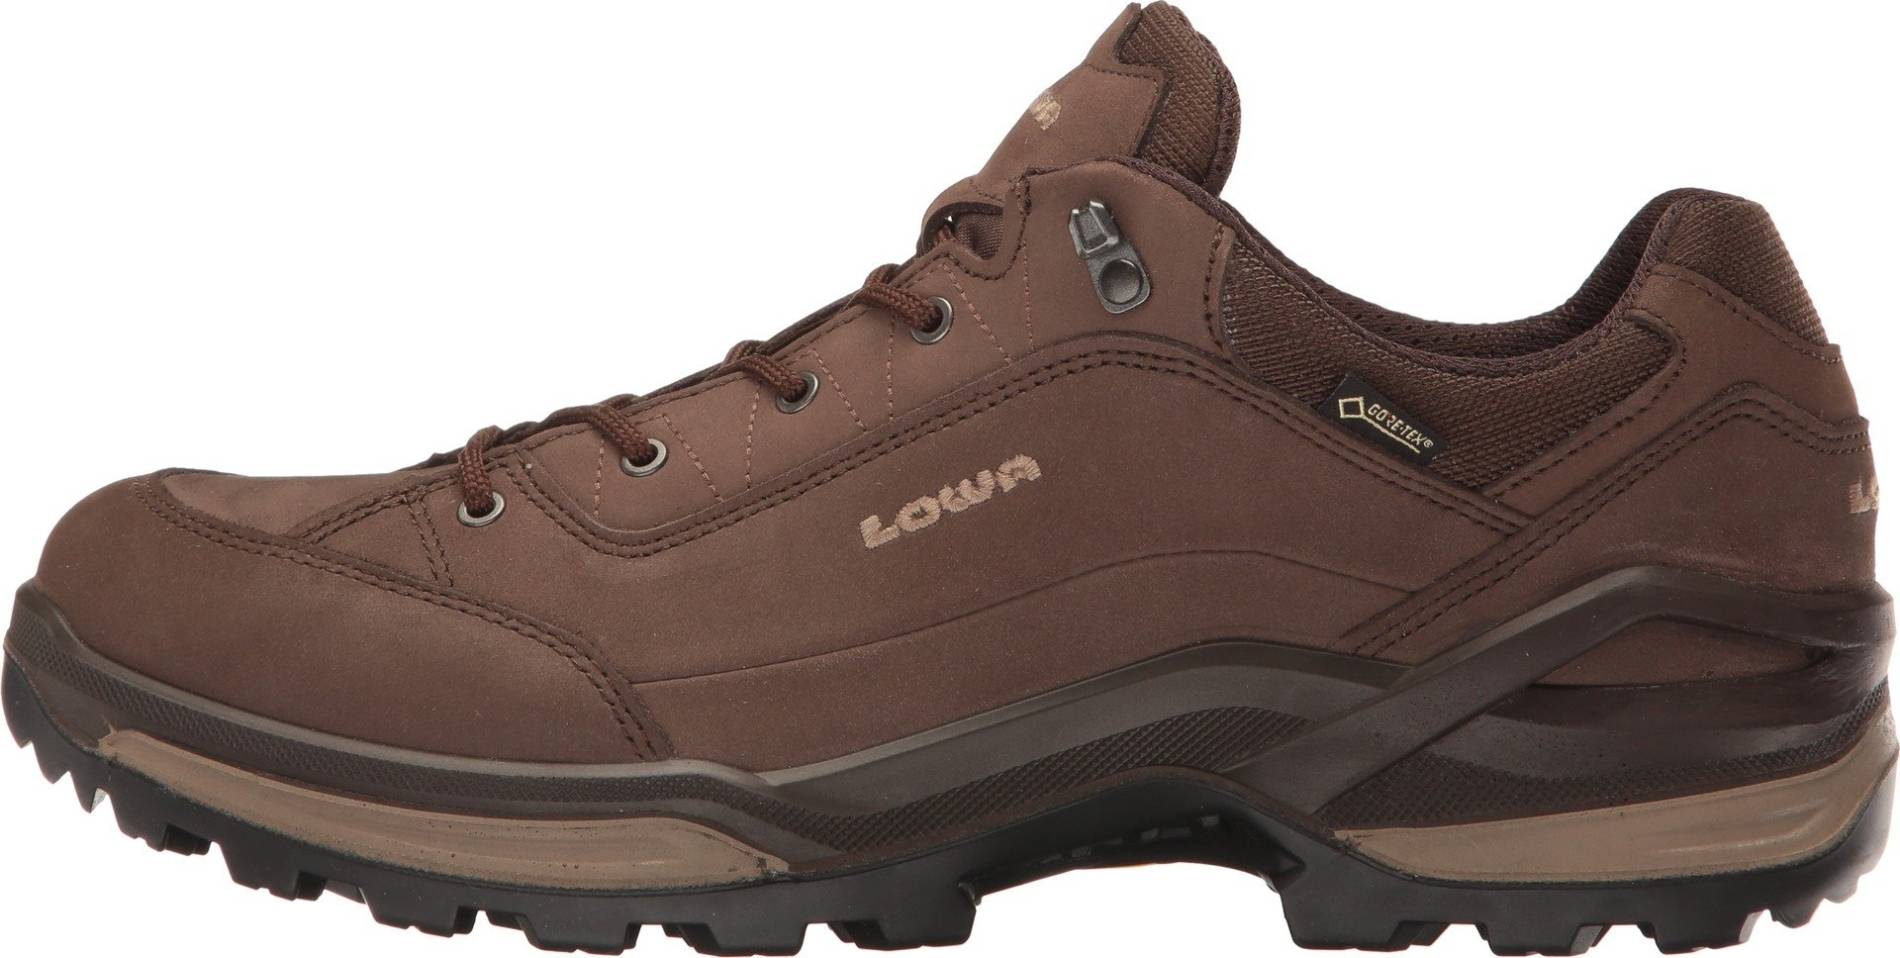 LOWA Renegade GTX LO Men Gore-Tex Outdoor Hiking Schuhe espresso 310963-4211 